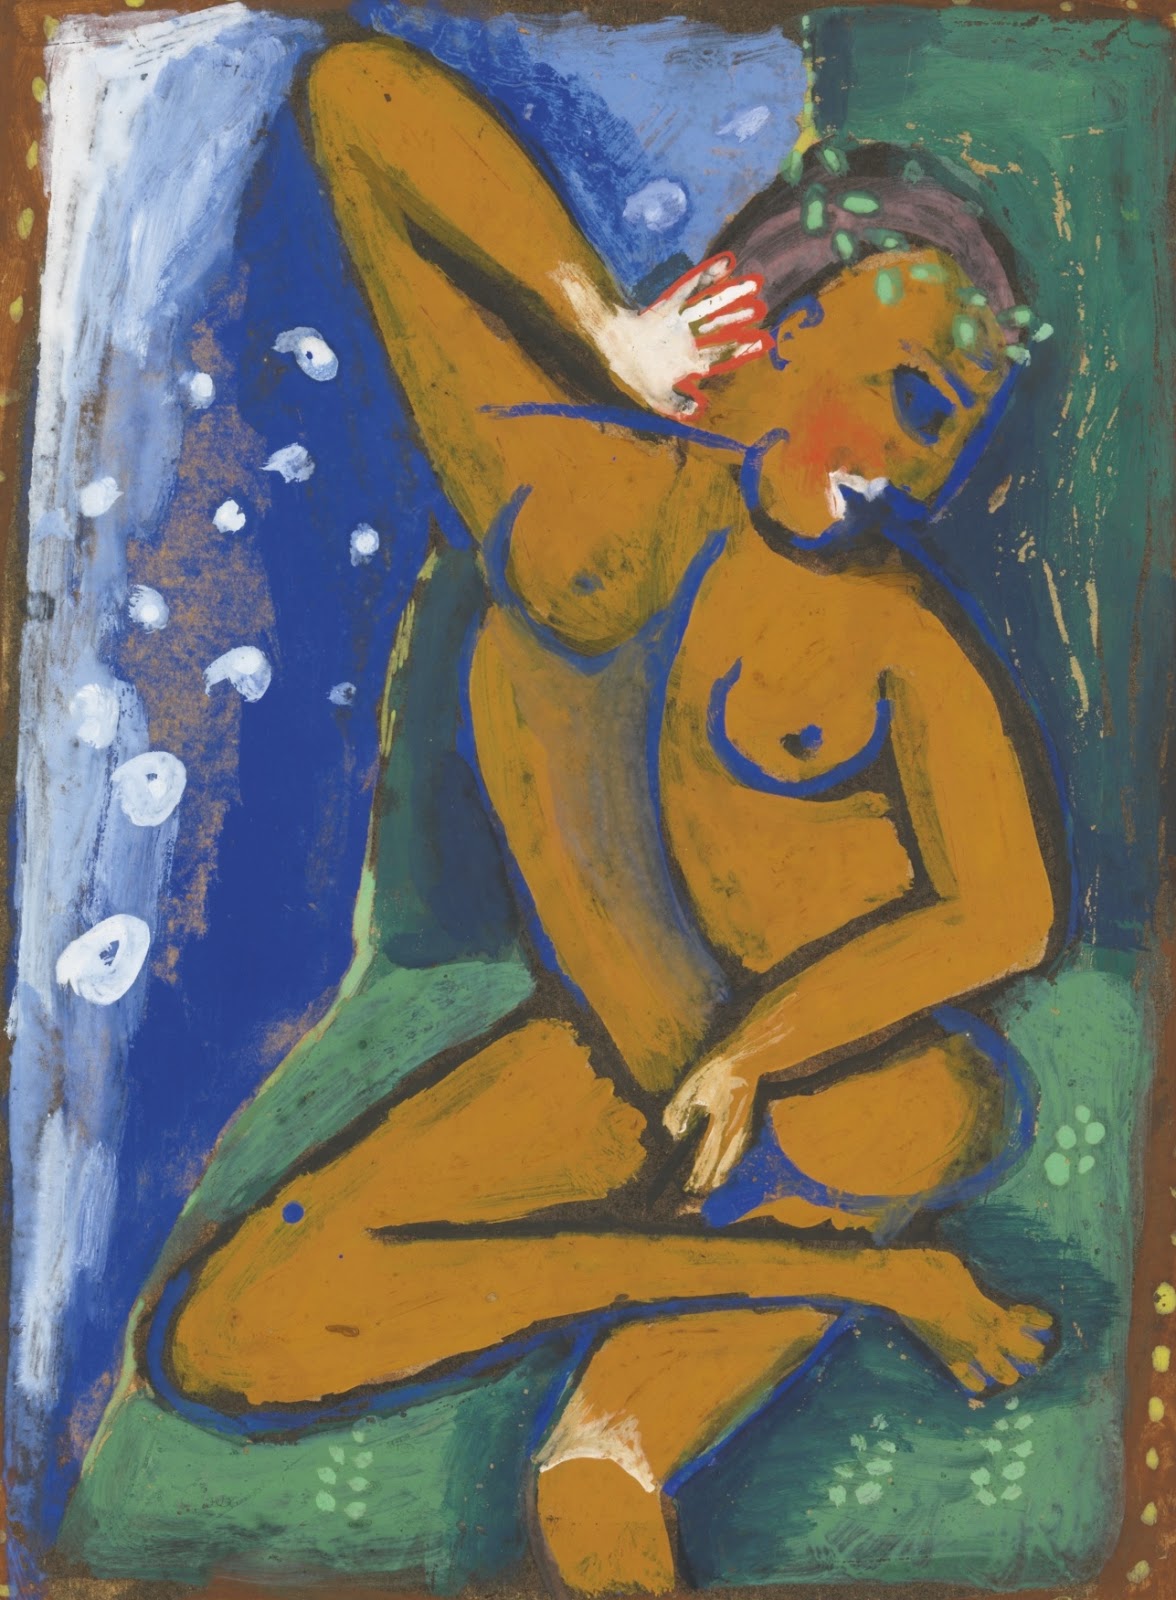 Marc+Chagall-1887-1985 (412).jpg